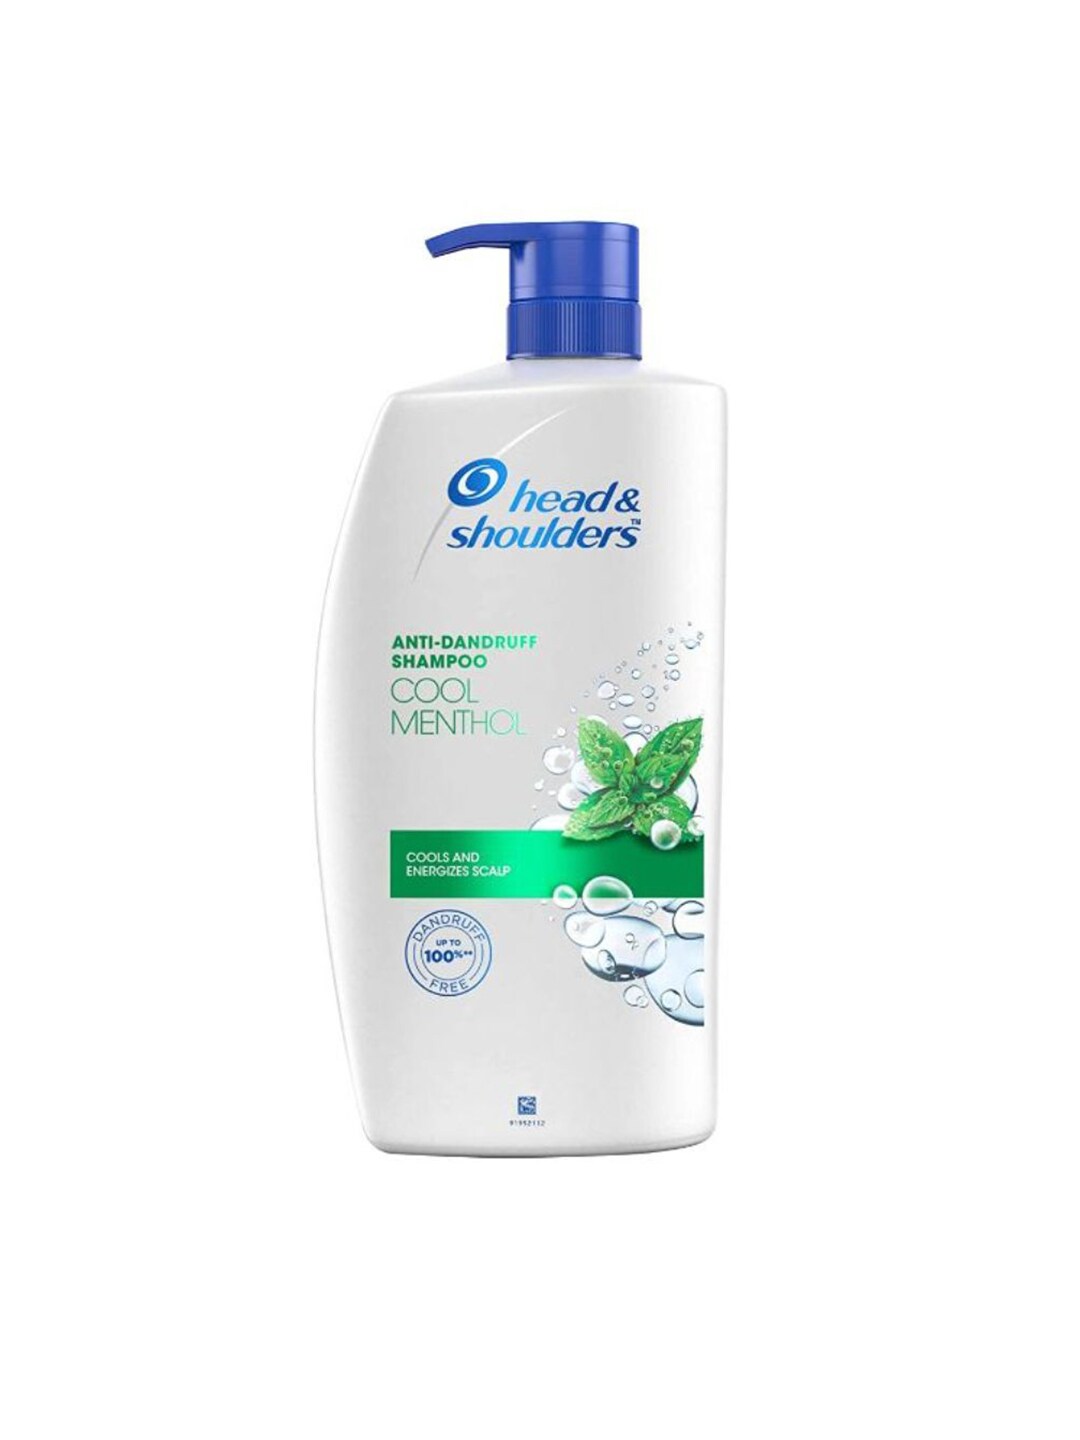 Head & Shoulders Cool Menthol Anti-Dandruff Shampoo 1 Litre Price in India